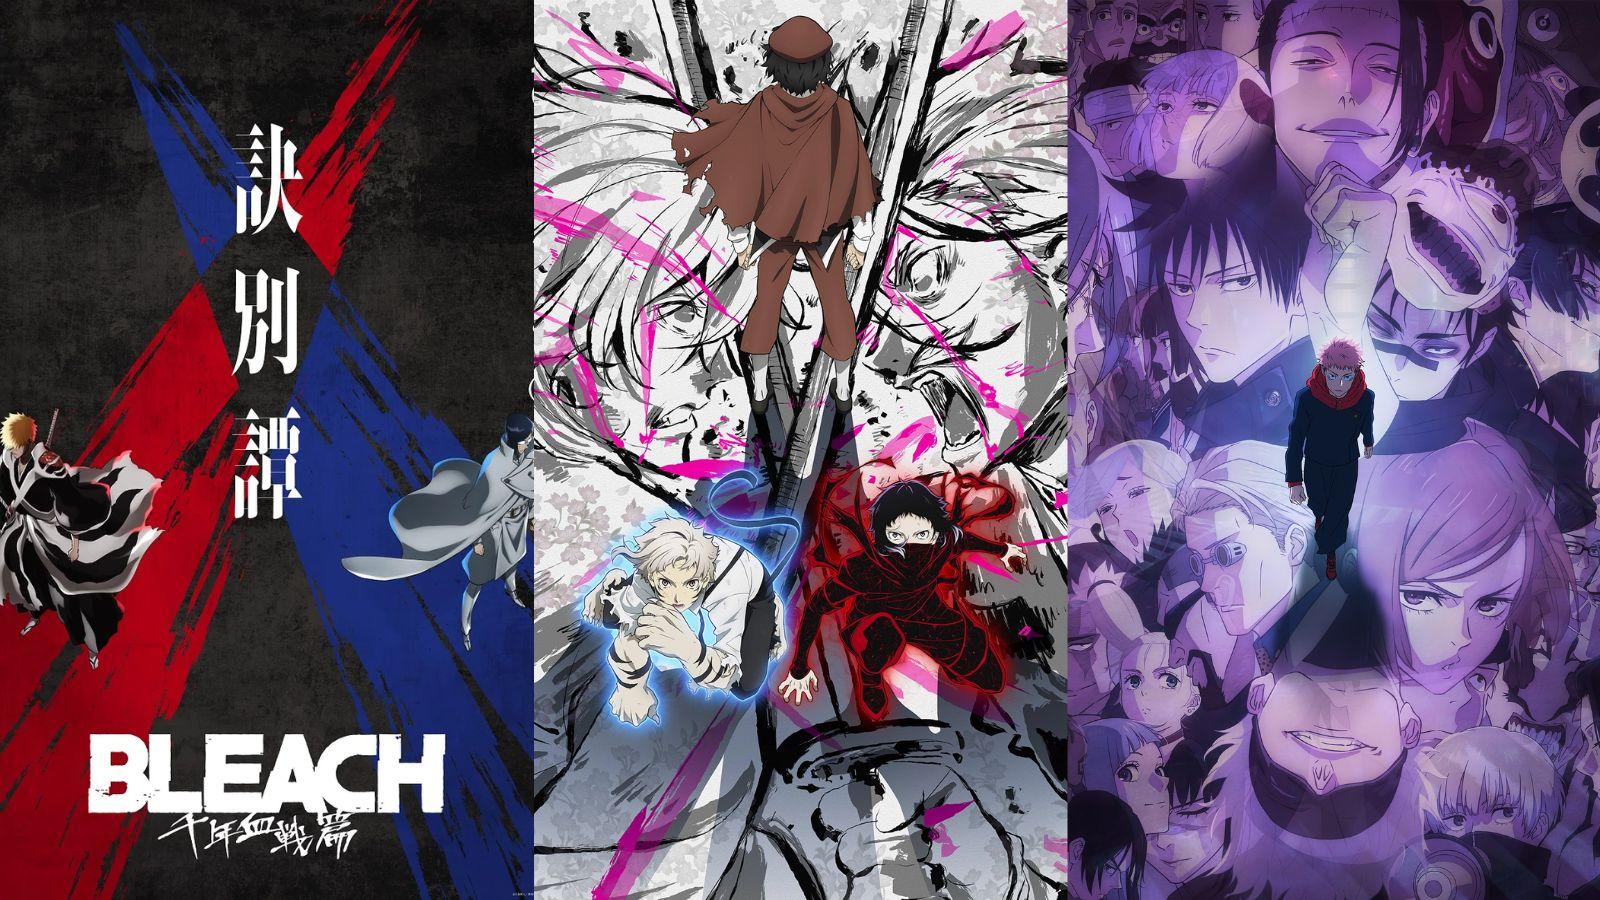 Summer 2023 anime schedule announced by Crunchyroll - Dexerto